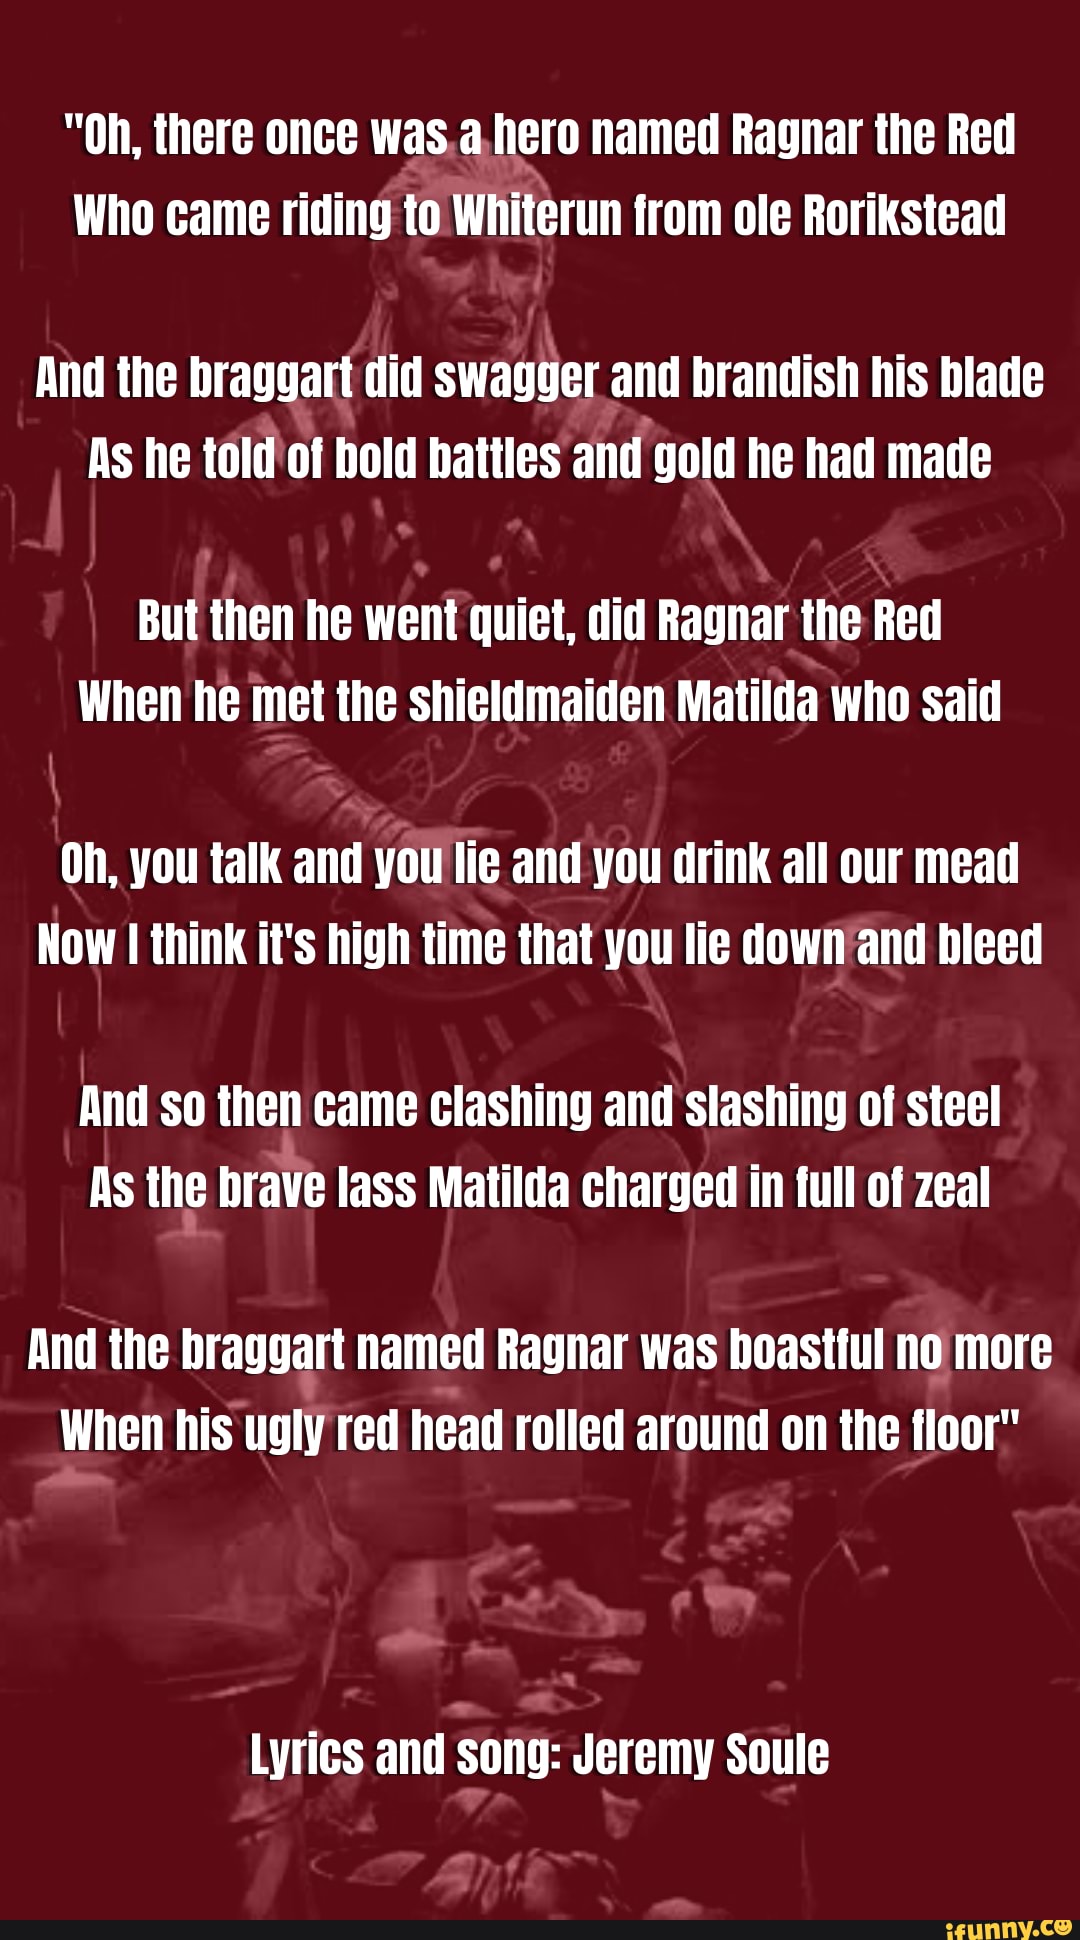 Bloodrage - song and lyrics by SPARTAN RAGE, Crown R